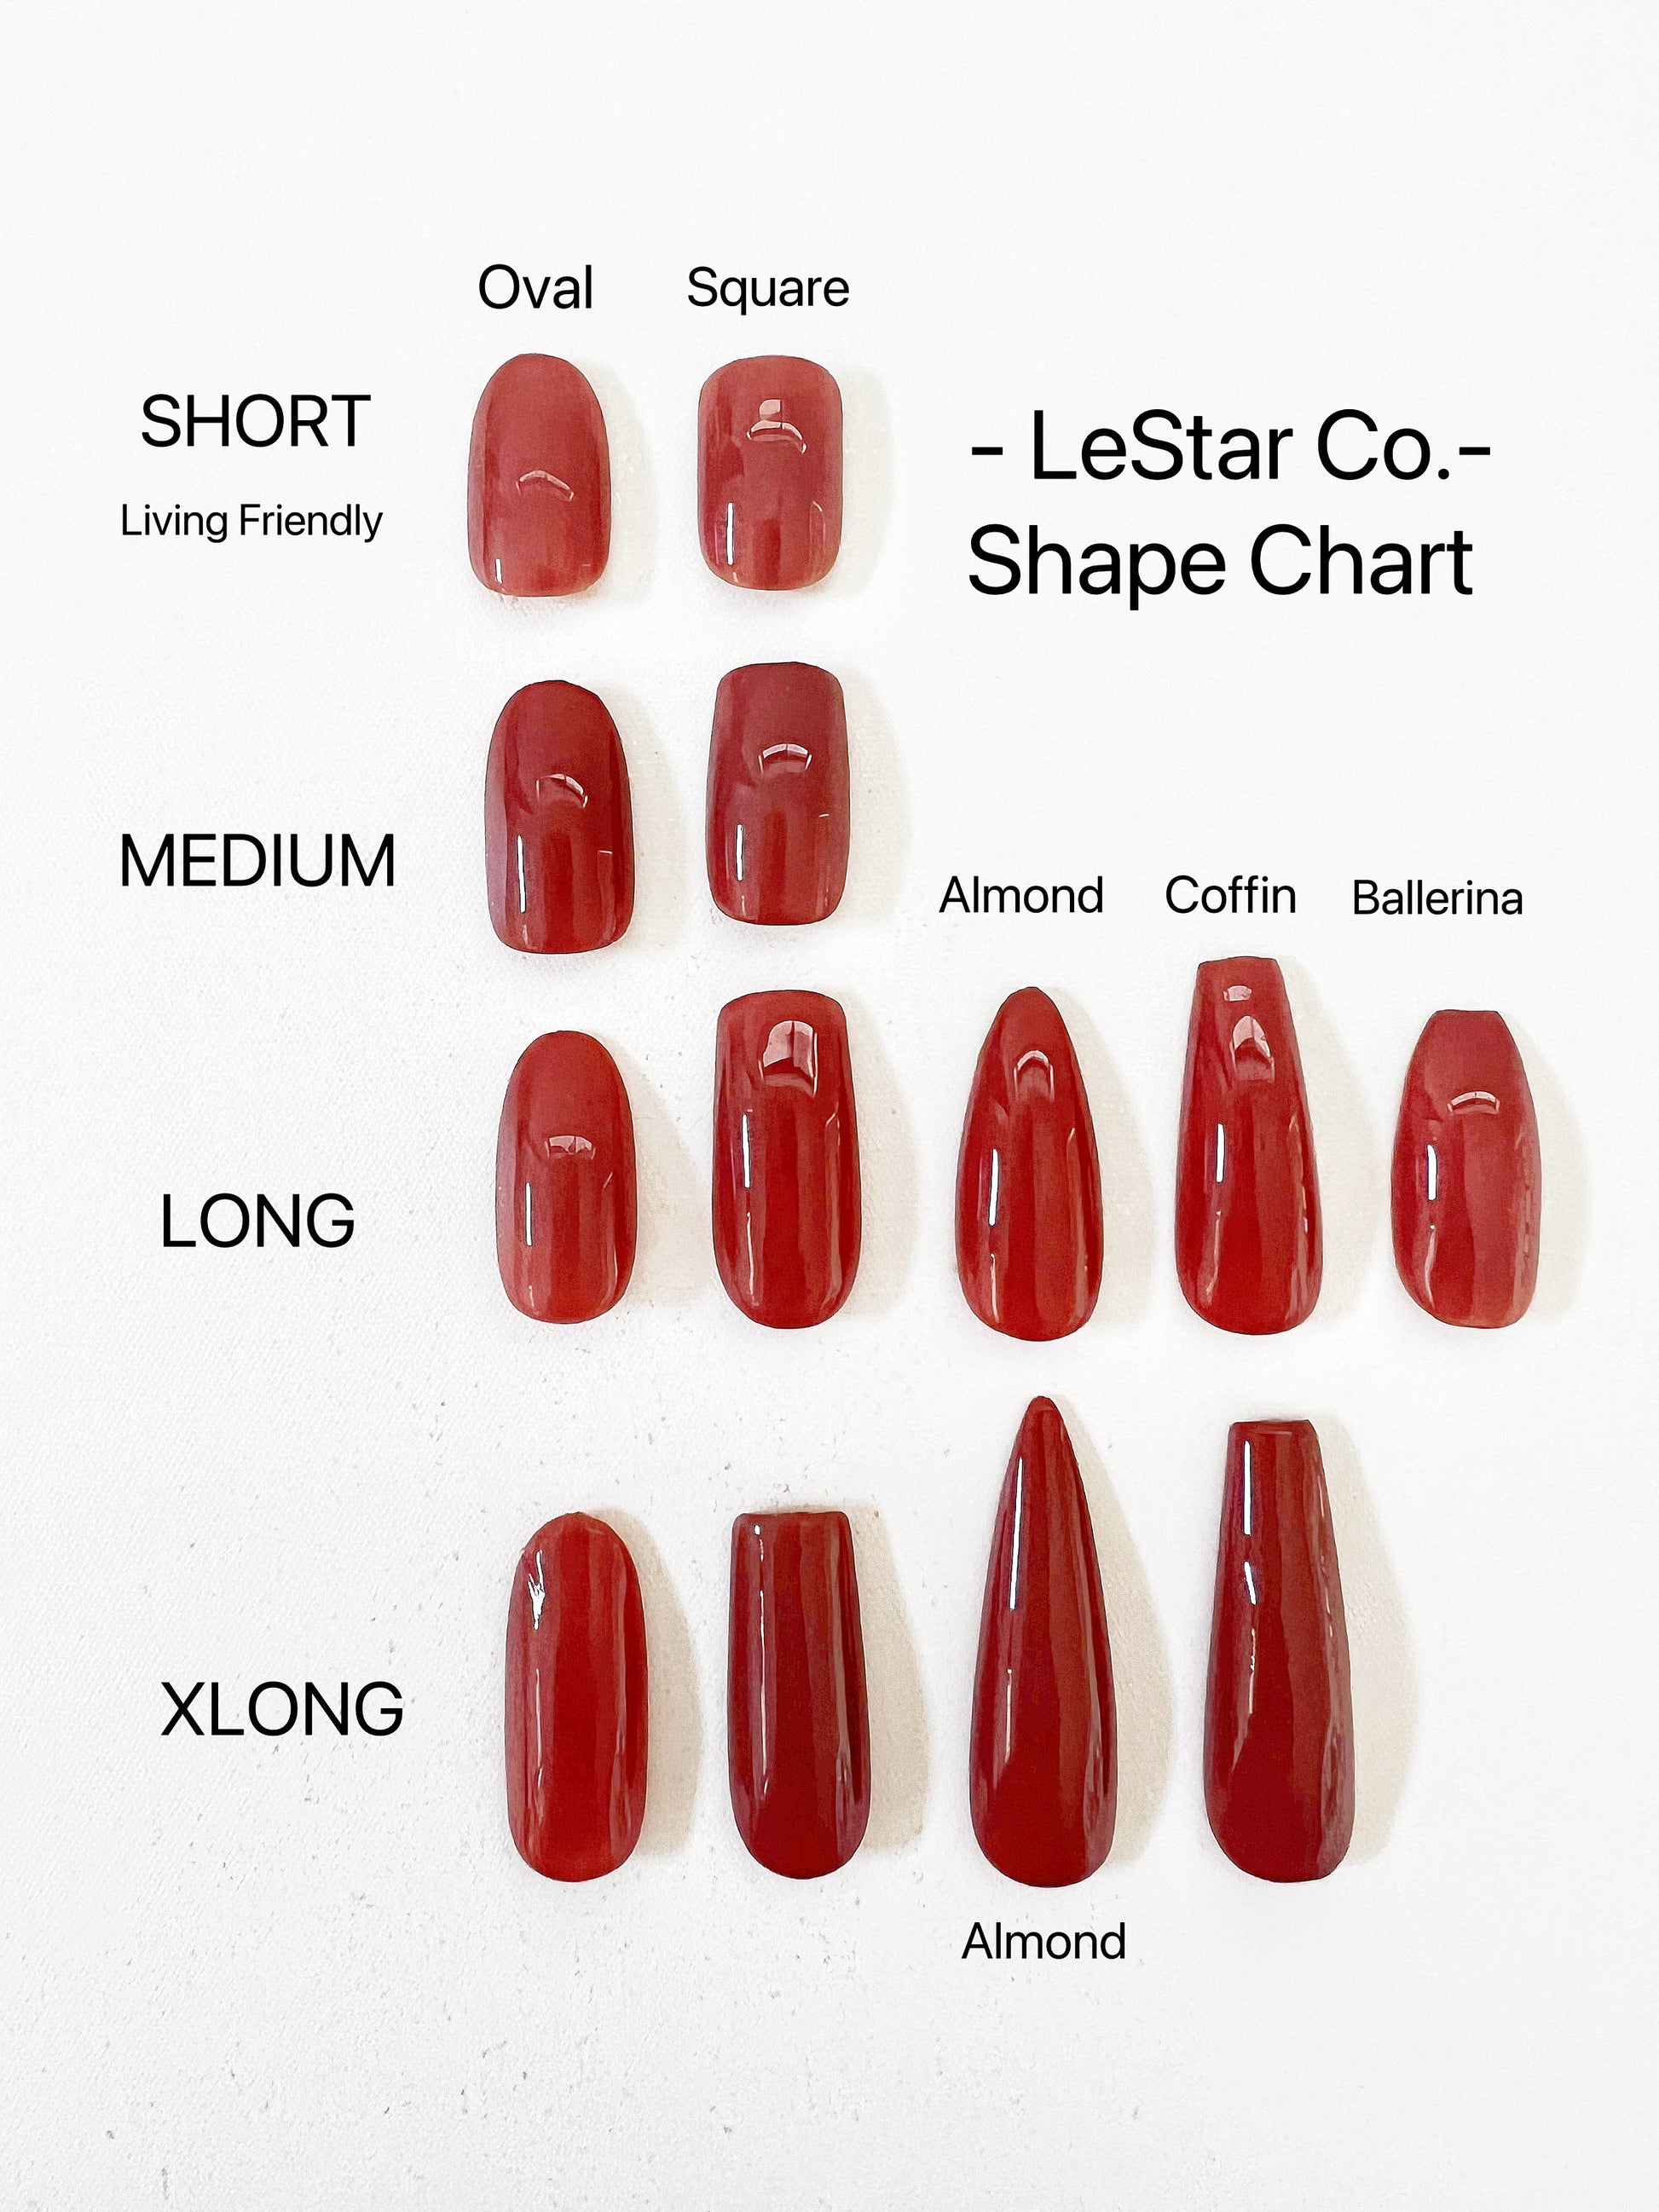 Reusable Starry Blush | Premium Press on Nails Gel Manicure | Fake Nails | Handmade Gel Nail Artist faux nails ML432